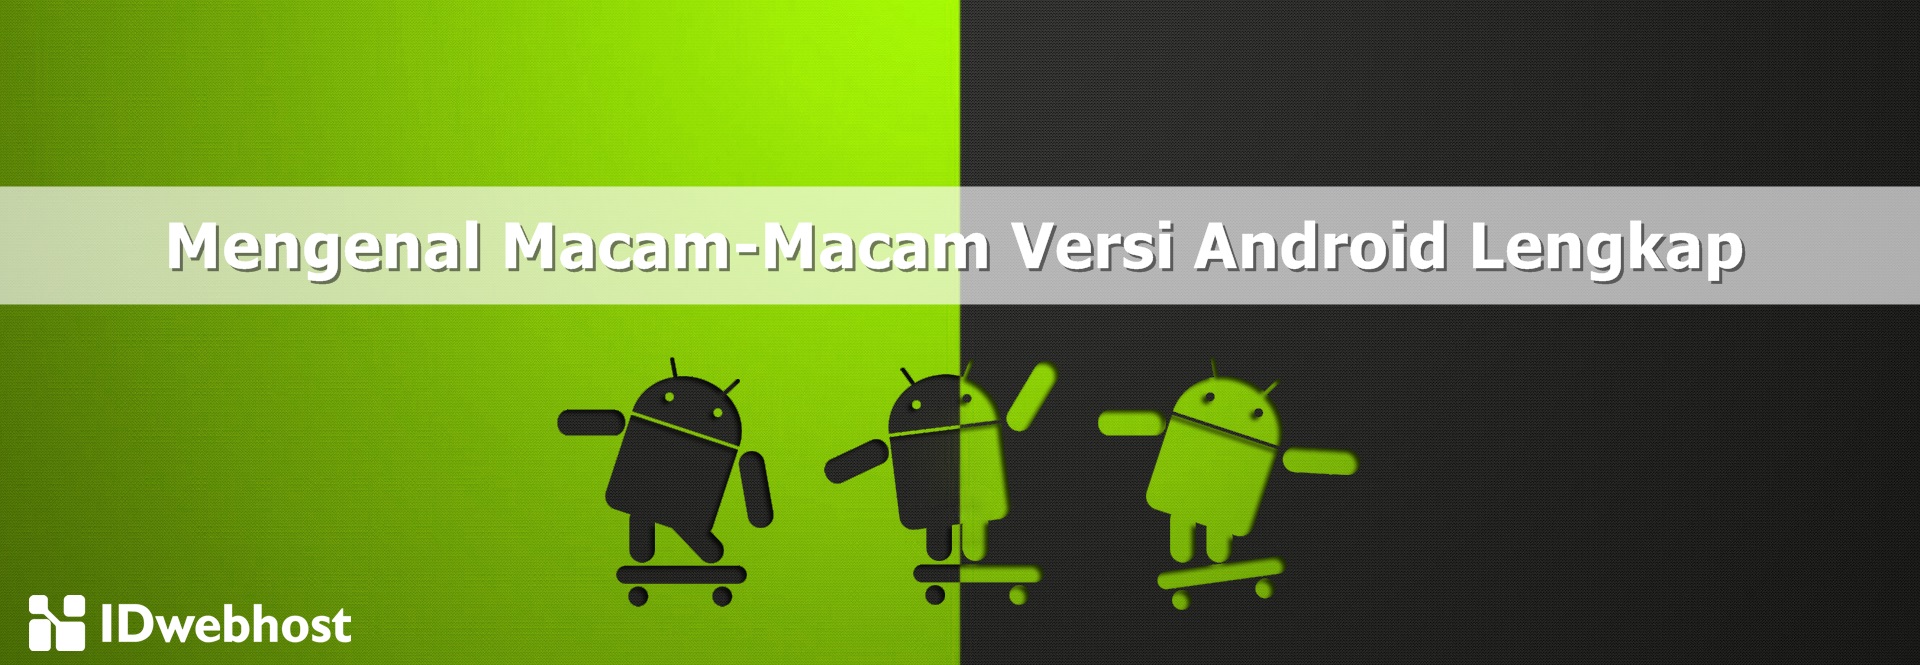 Mengenal Macam-Macam Versi Android Lengkap Hingga Sekarang